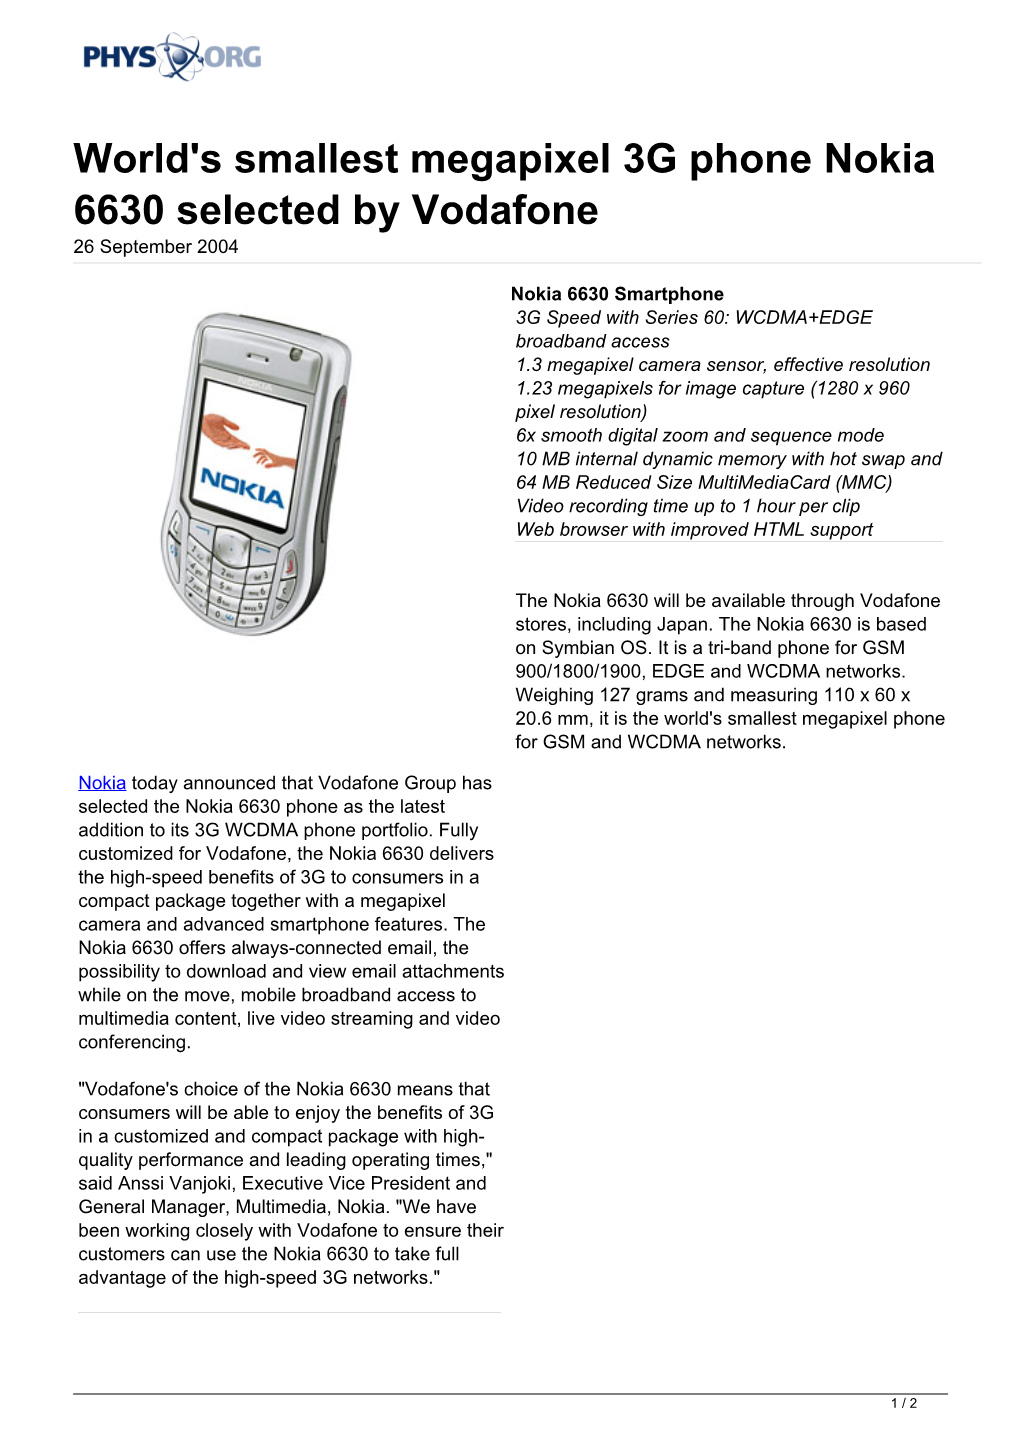 World's Smallest Megapixel 3G Phone Nokia 6630 Selected by Vodafone 26 September 2004